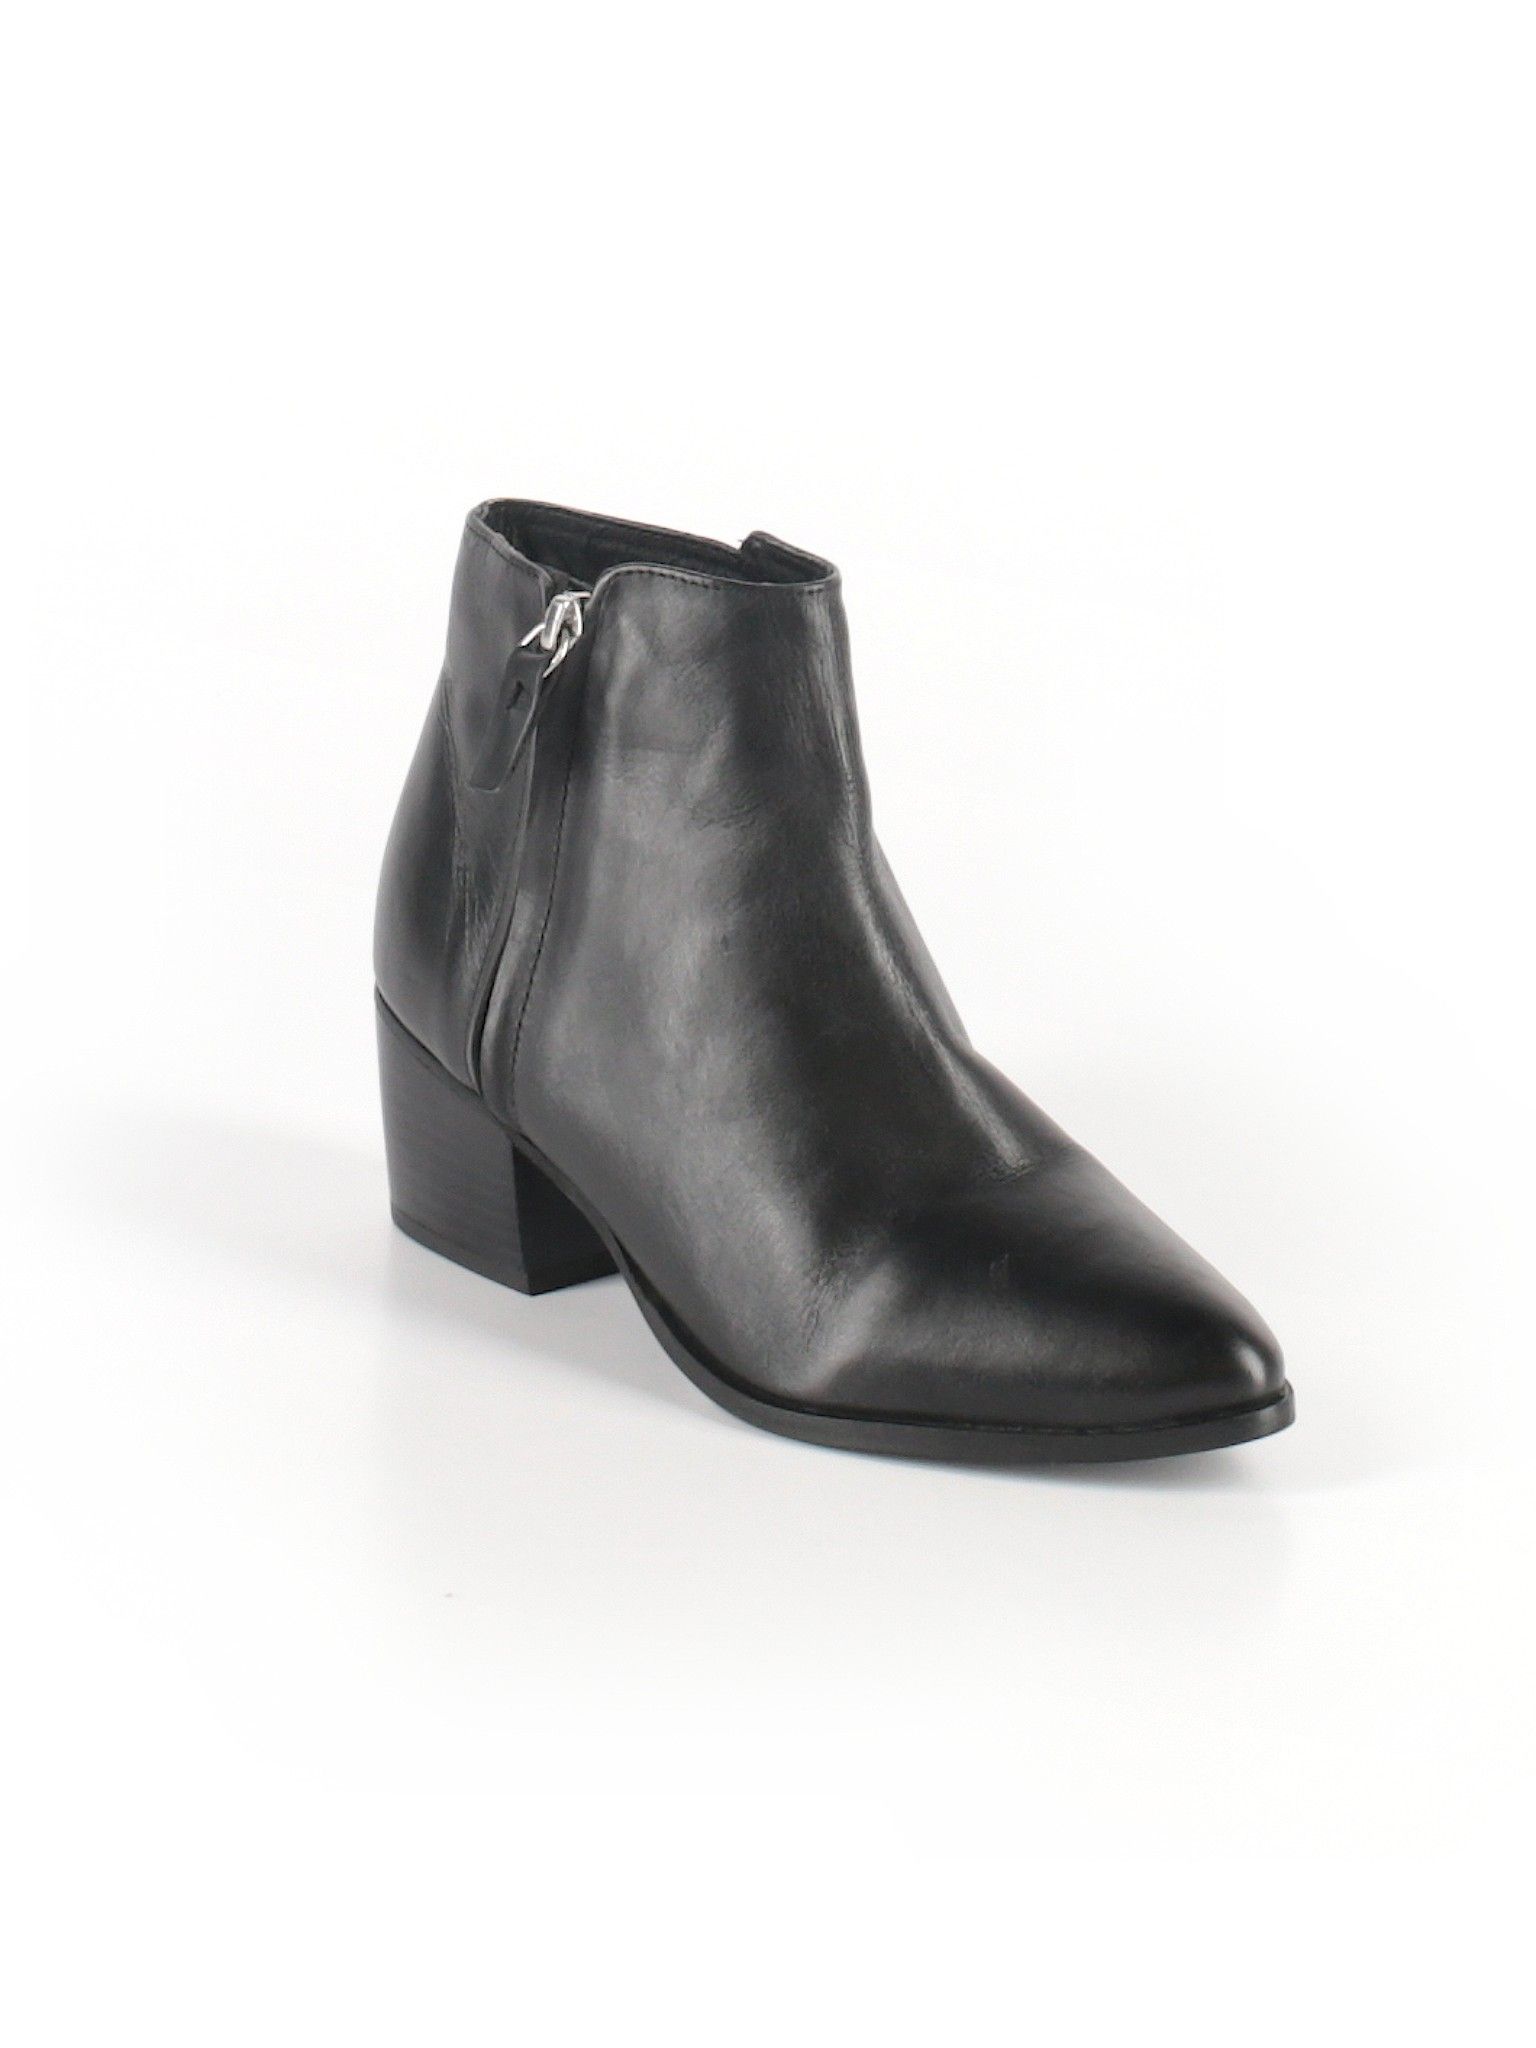 Topshop Ankle Boots Size 12: Black Women's Shoes - 41139159 | thredUP